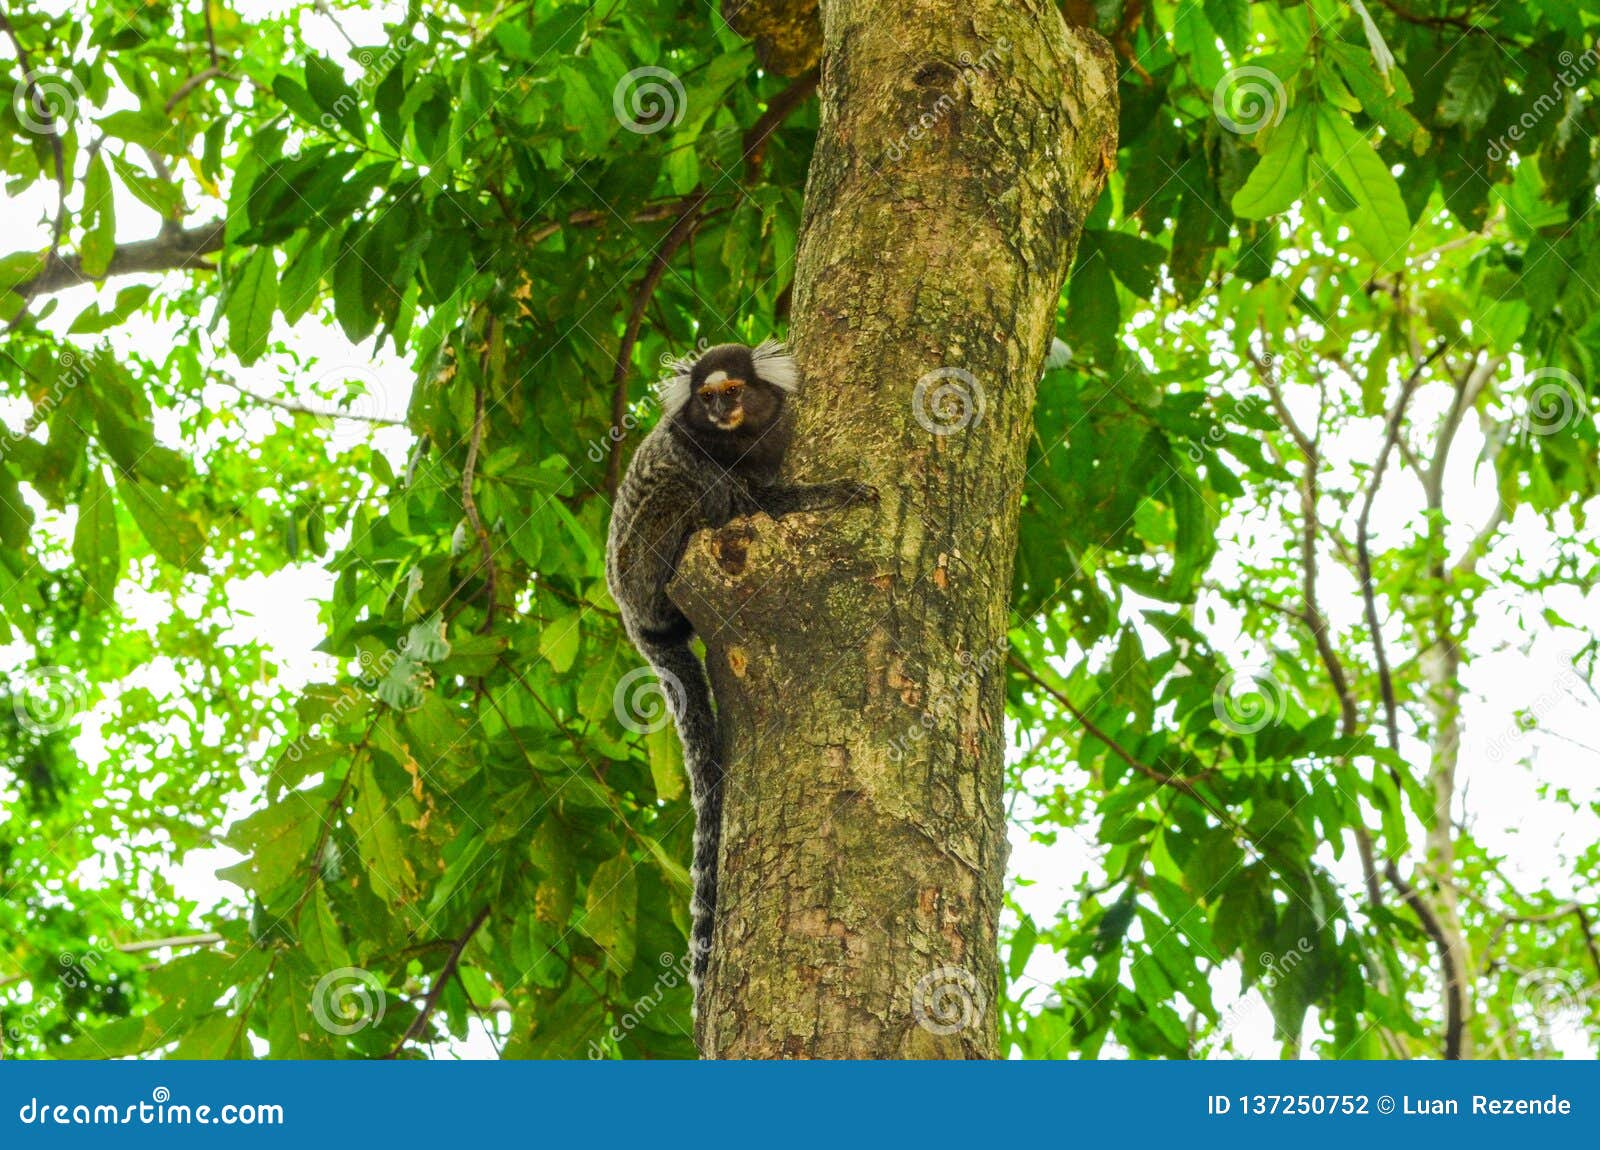 sagui monkey mico estrela in the wild in rio de janeiro, brazil